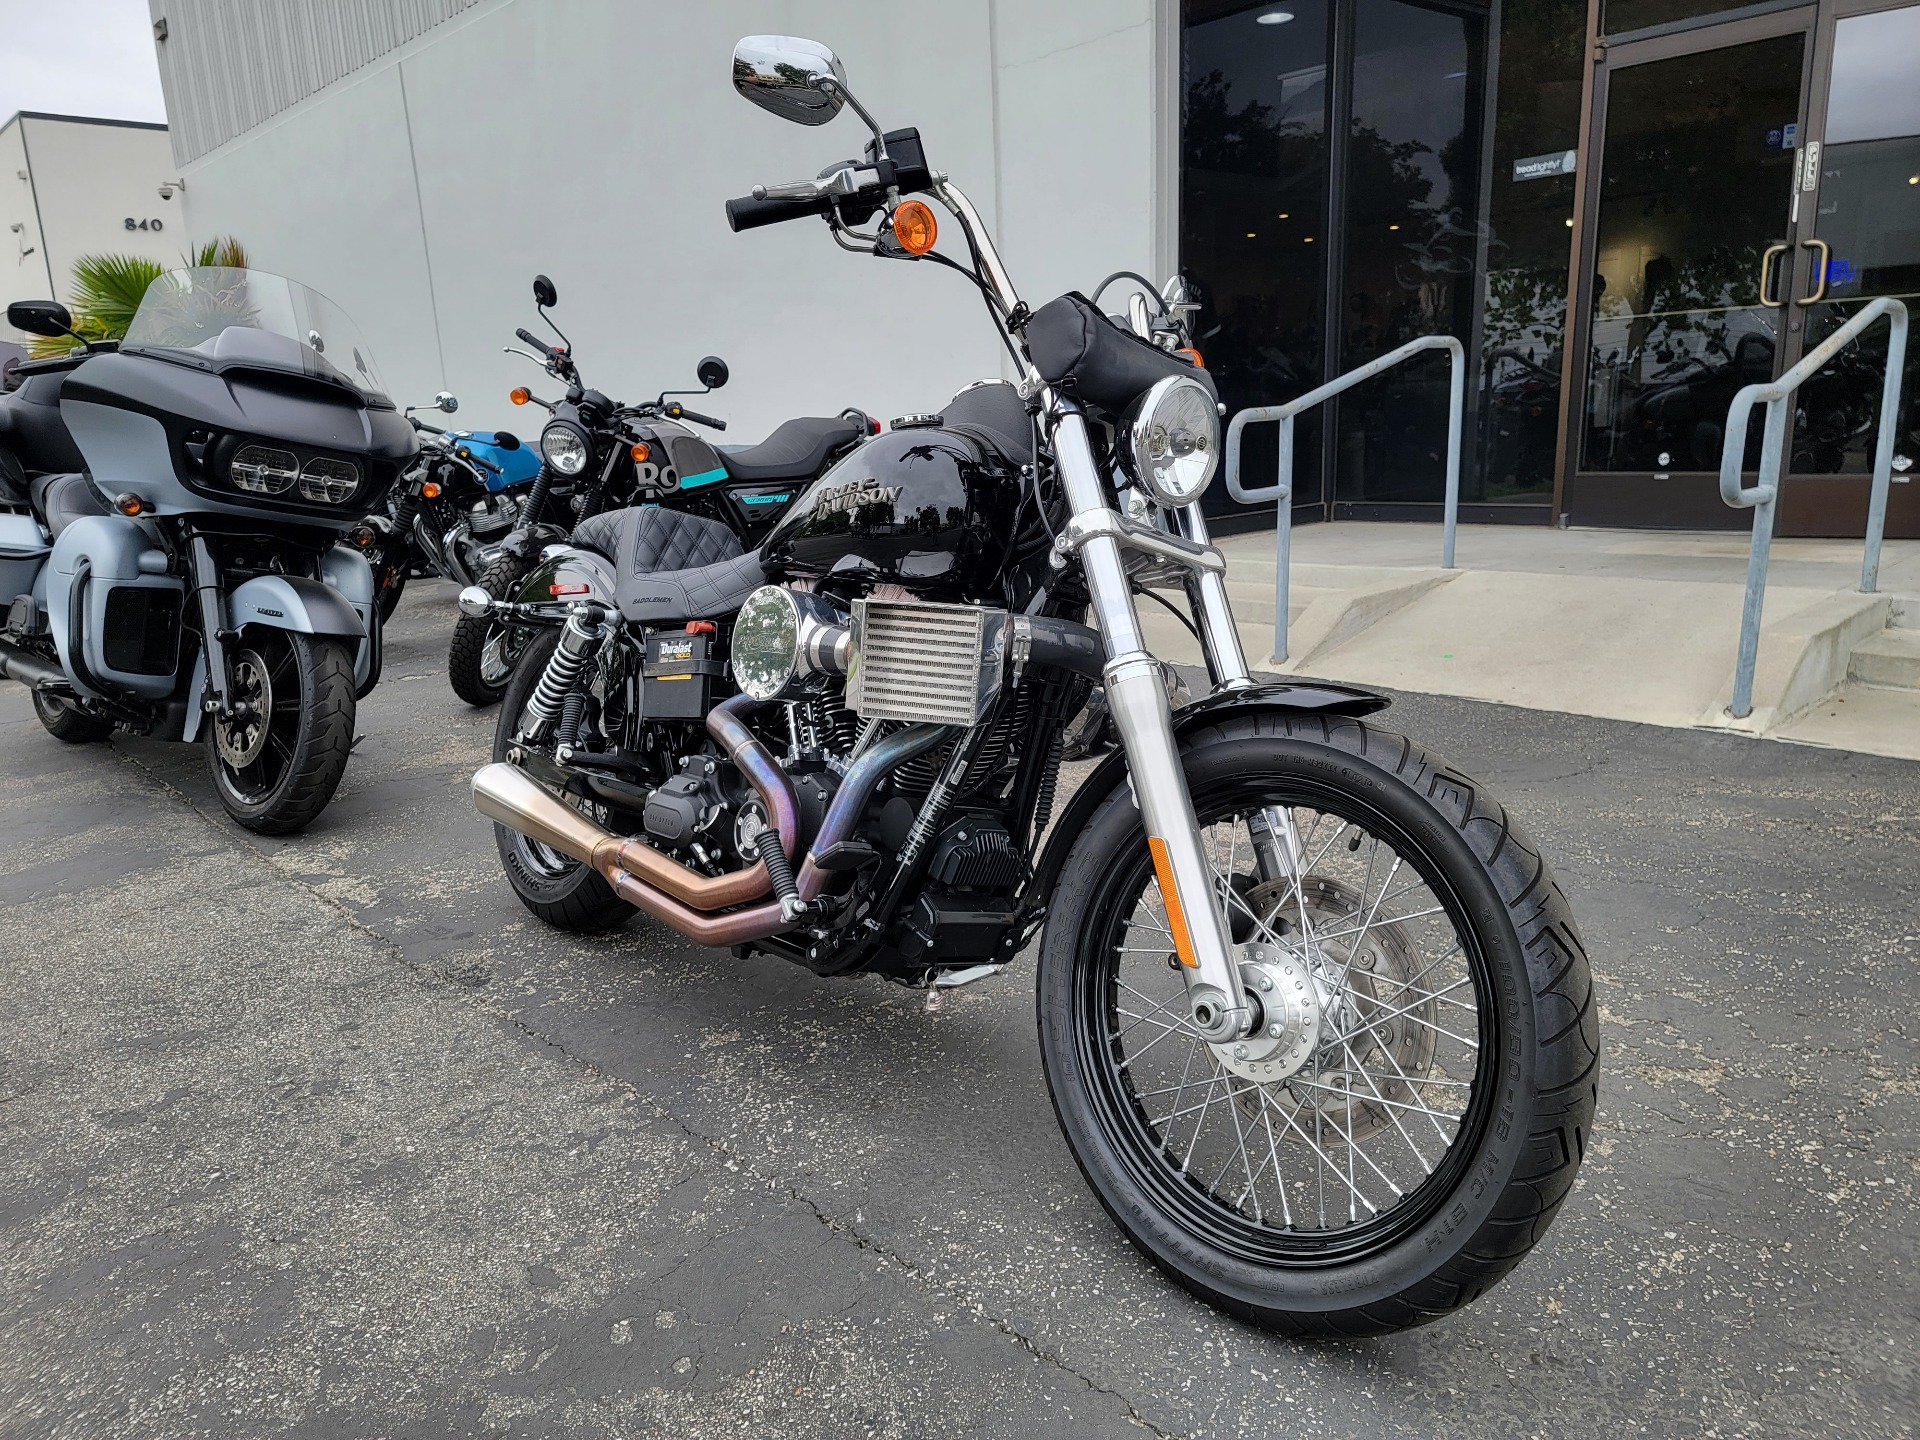 2012 Harley-Davidson Dyna® Street Bob® in Newbury Park, California - Photo 8